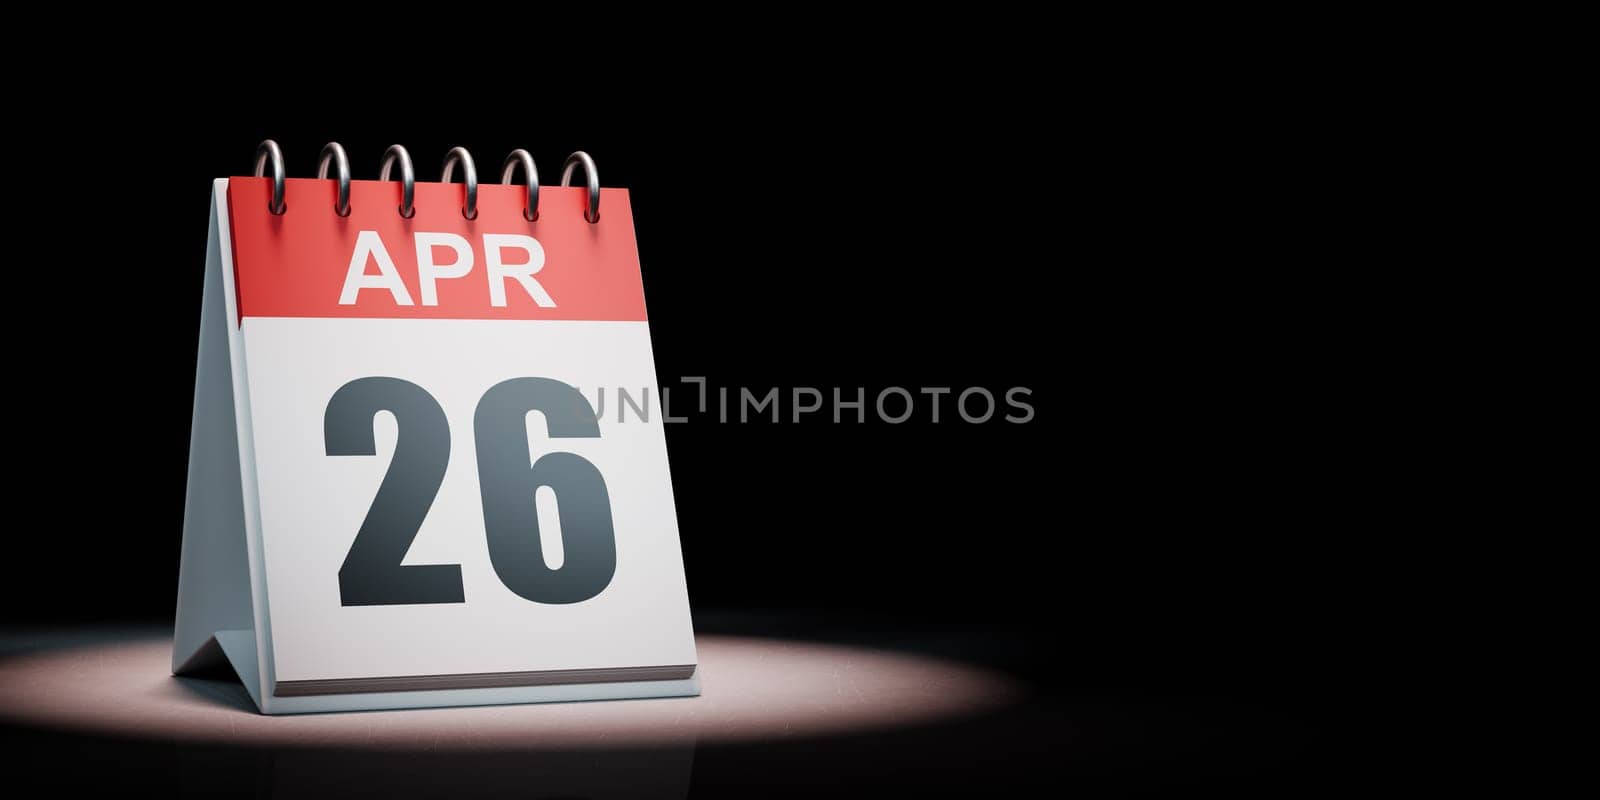 April 26 Calendar Spotlighted on Black Background by make